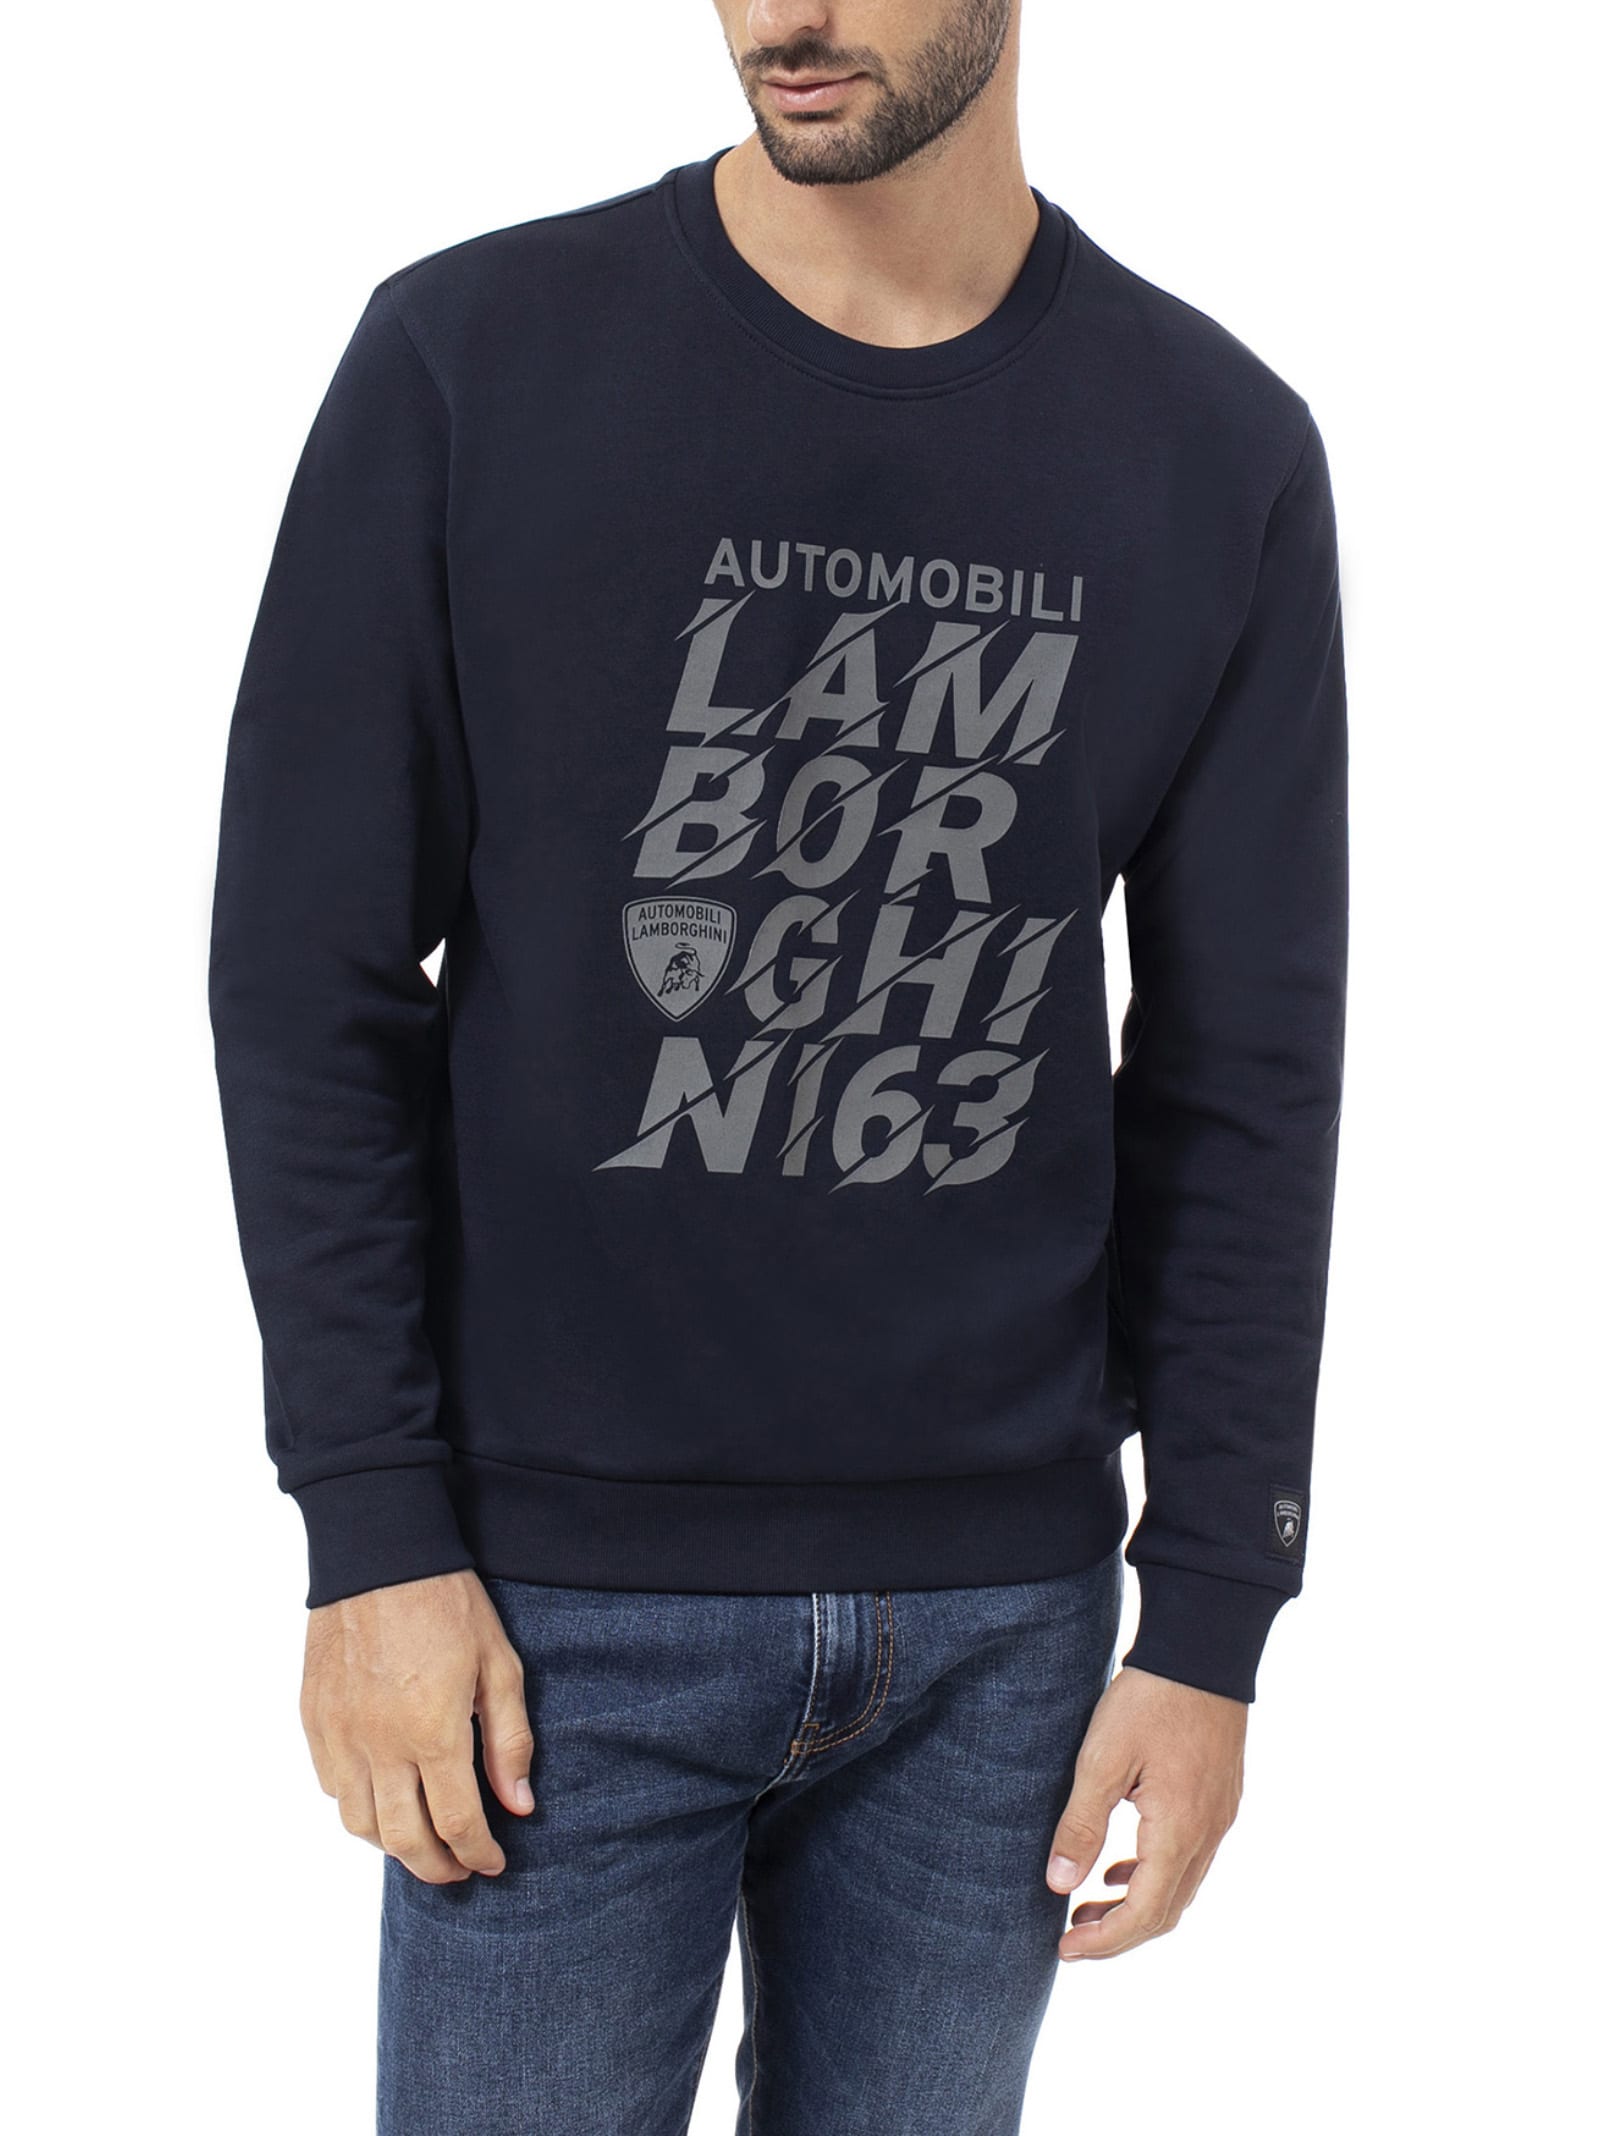 Automobili Lamborghini Crew Neck Sweatshirt With Lamborghini Logo In Black And Grey